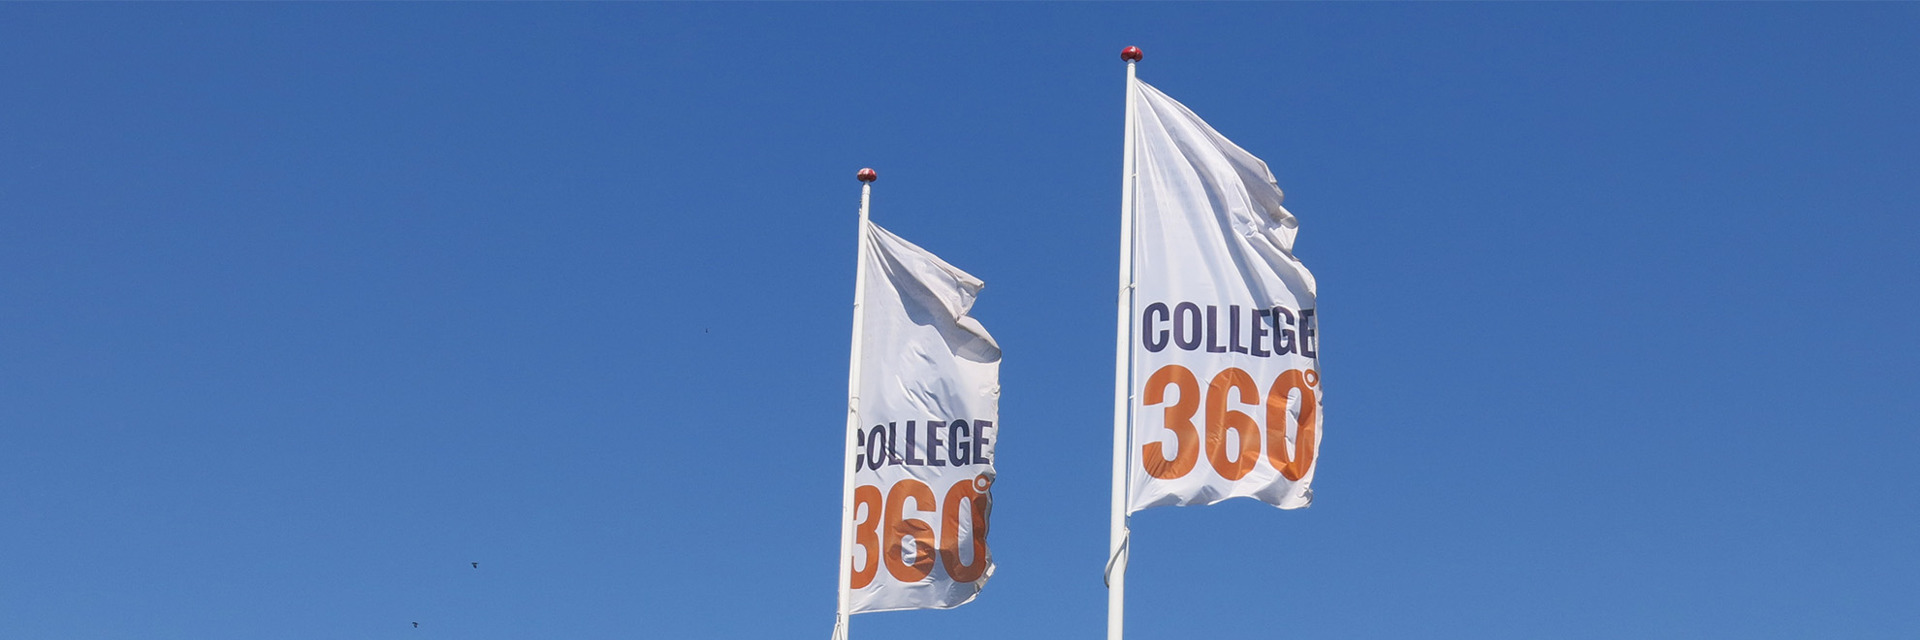 College360 logoflag